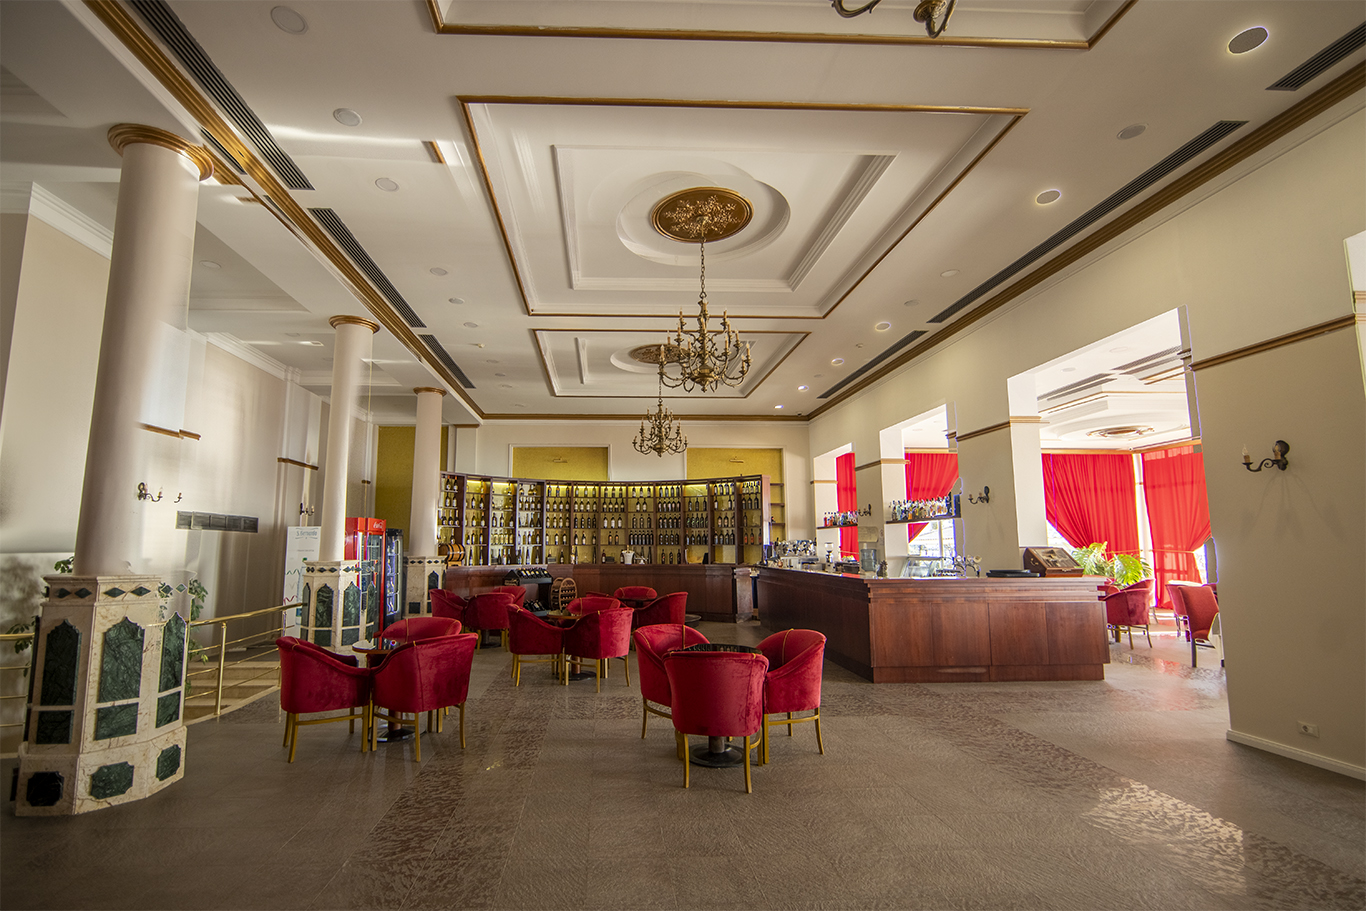 Letovanje Albanija autobusom, Drač, Hotel Luxury adriatic hotel & Spa, loby bar